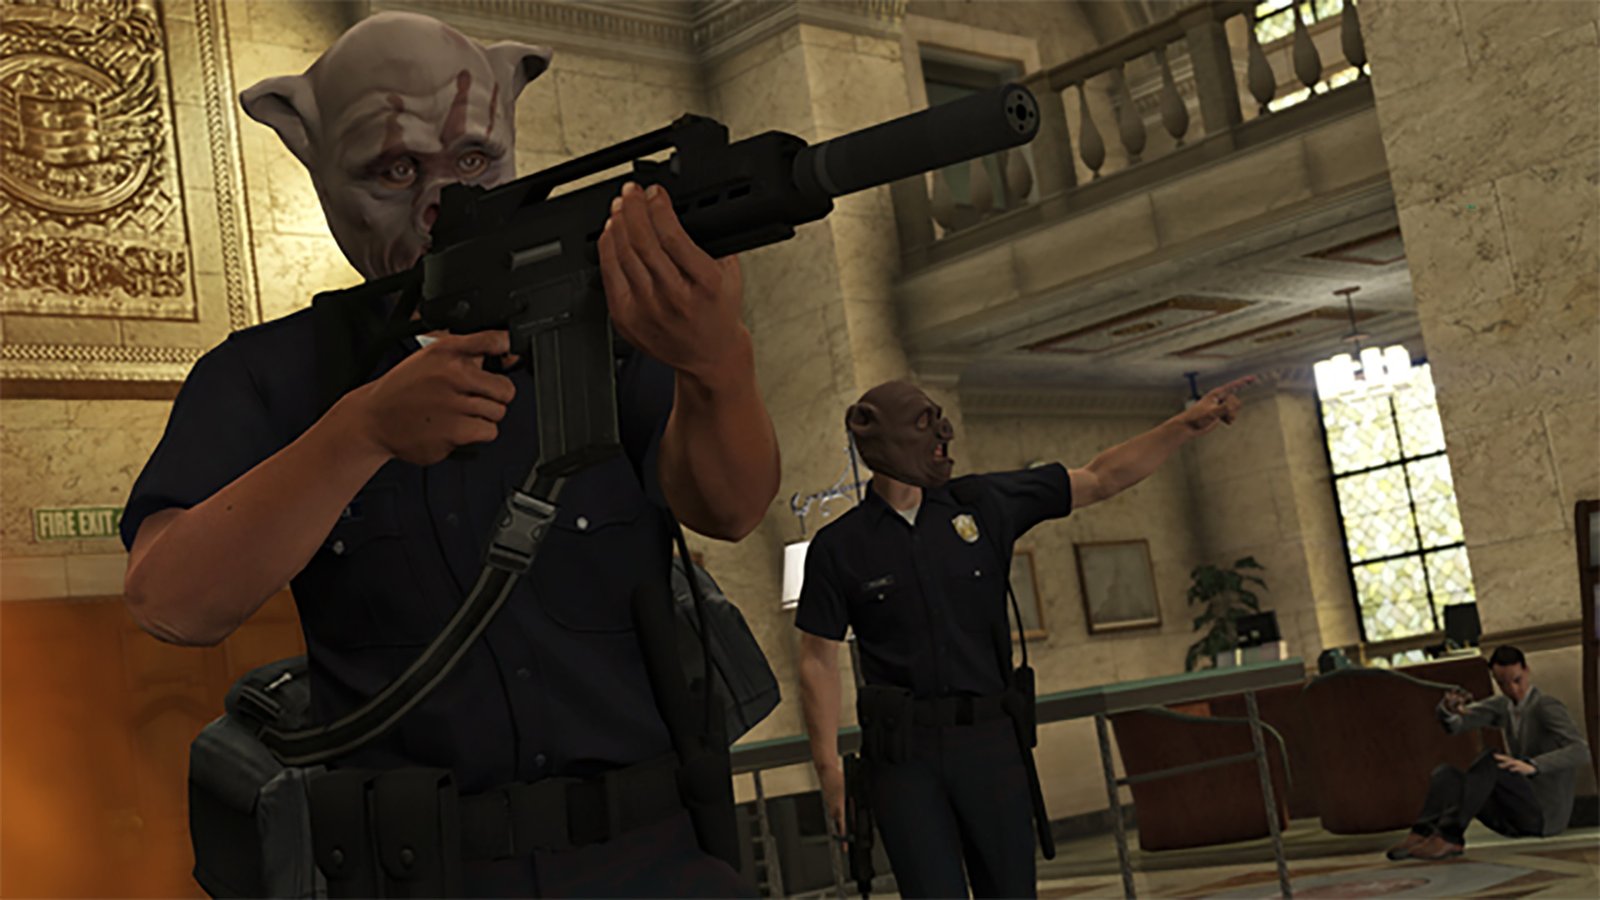 GTA Online Police Uniforms - Cop Outfit